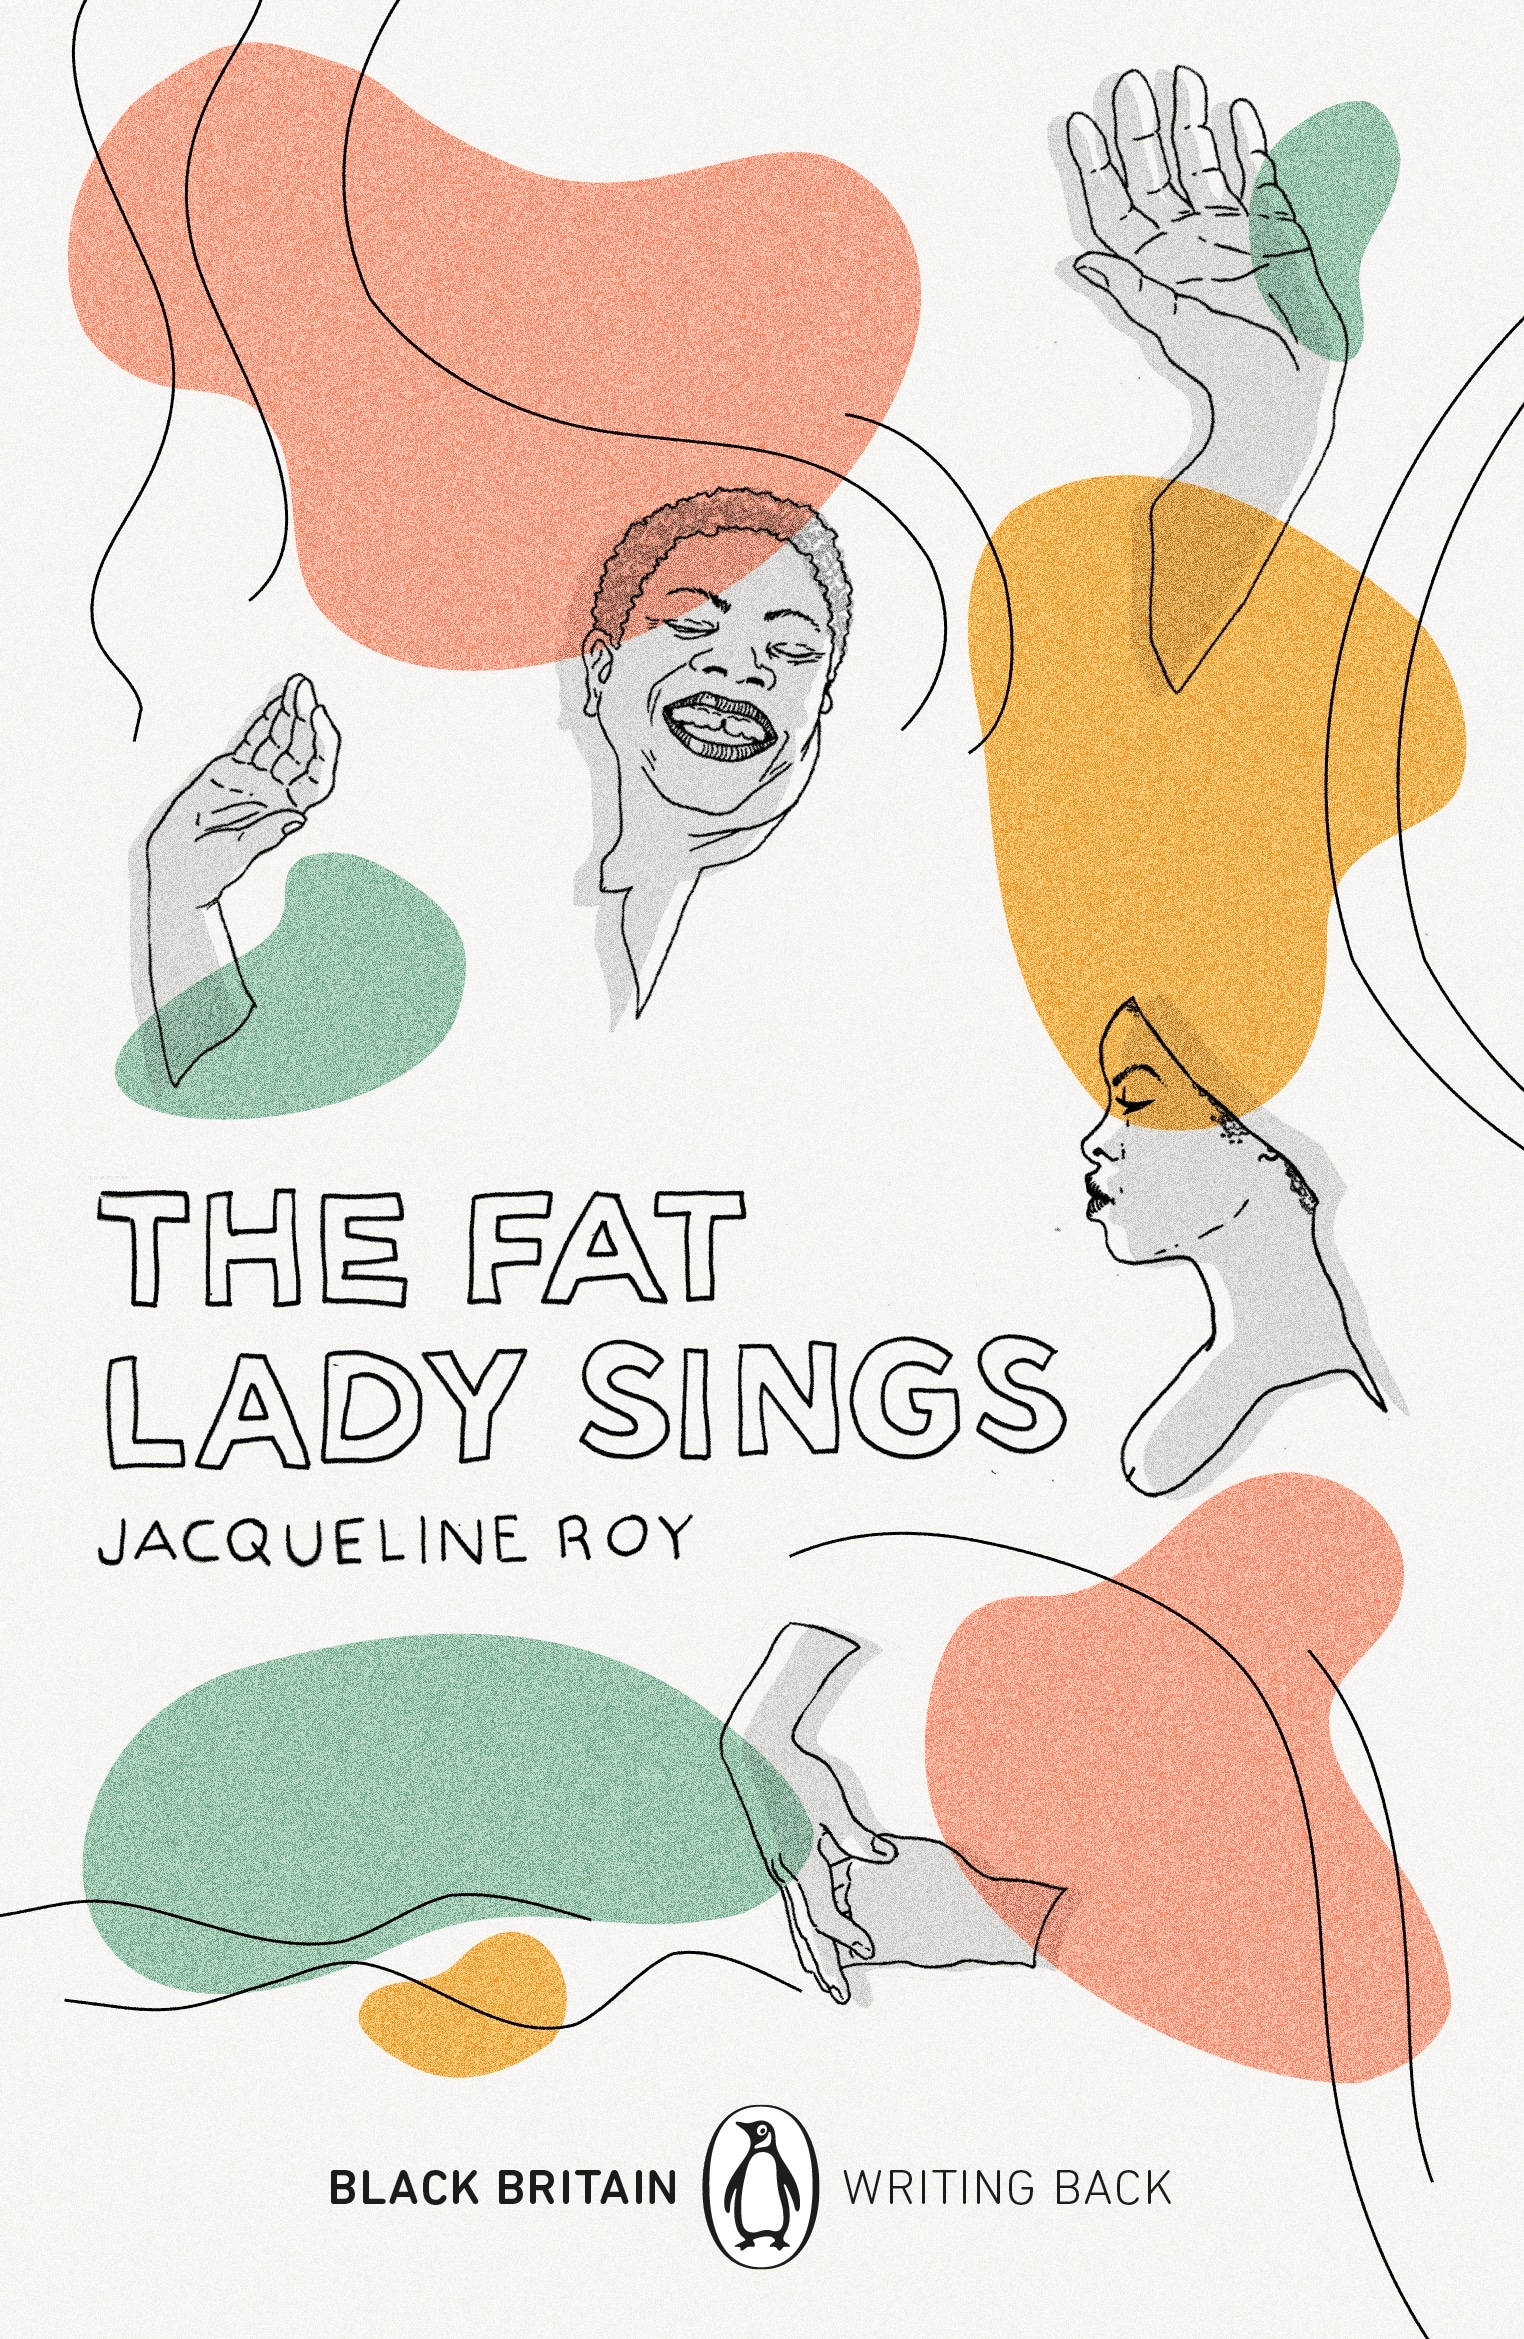 Book “The Fat Lady Sings” by Jacqueline Roy, Bernardine Evaristo — February 4, 2021